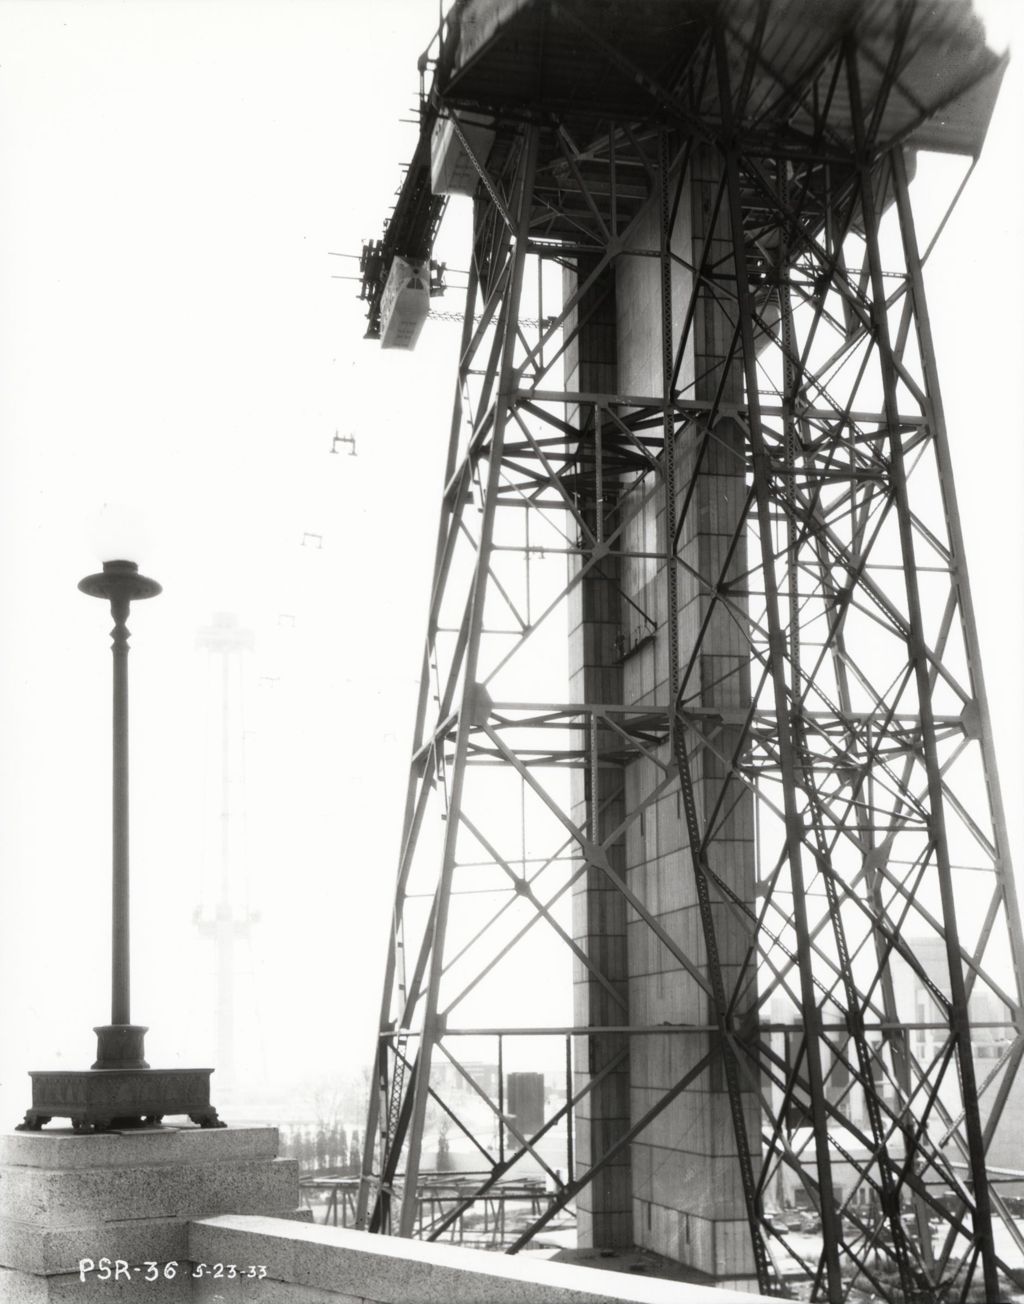 Miniature of Century of Progress Sky Ride towers